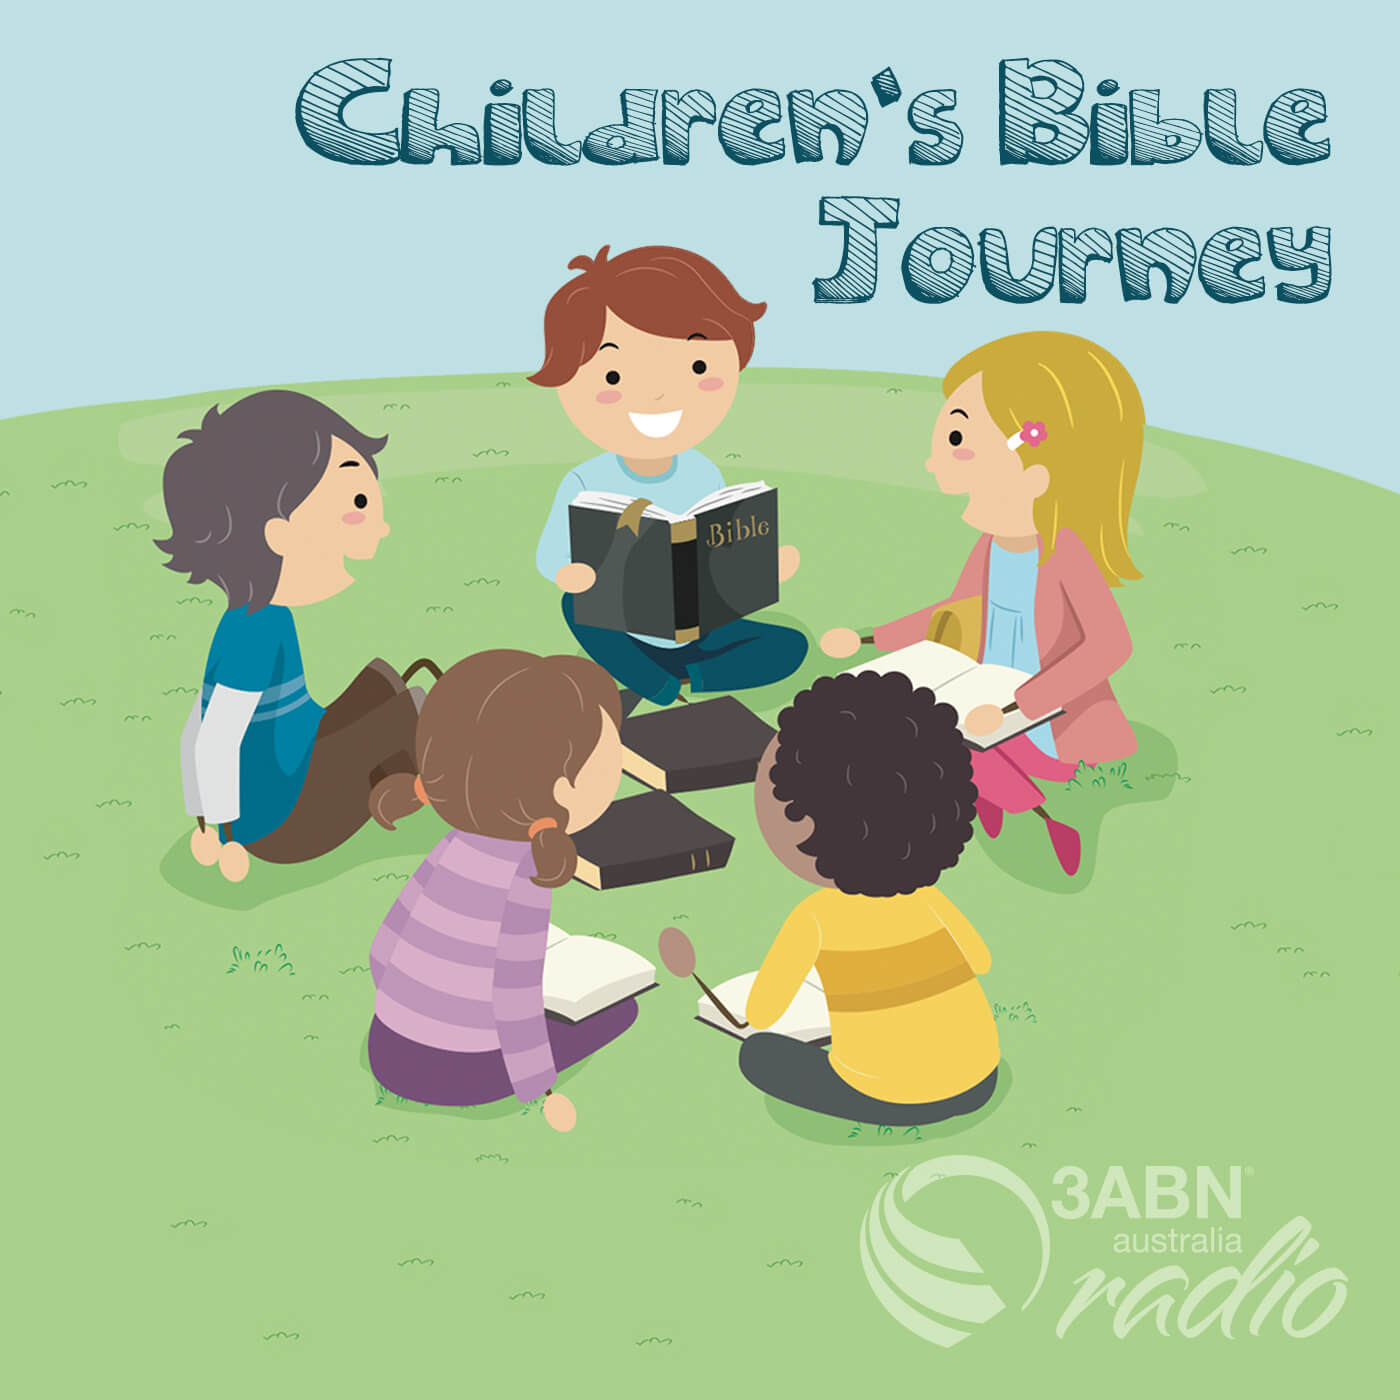 Children's Bible Journey - 2212